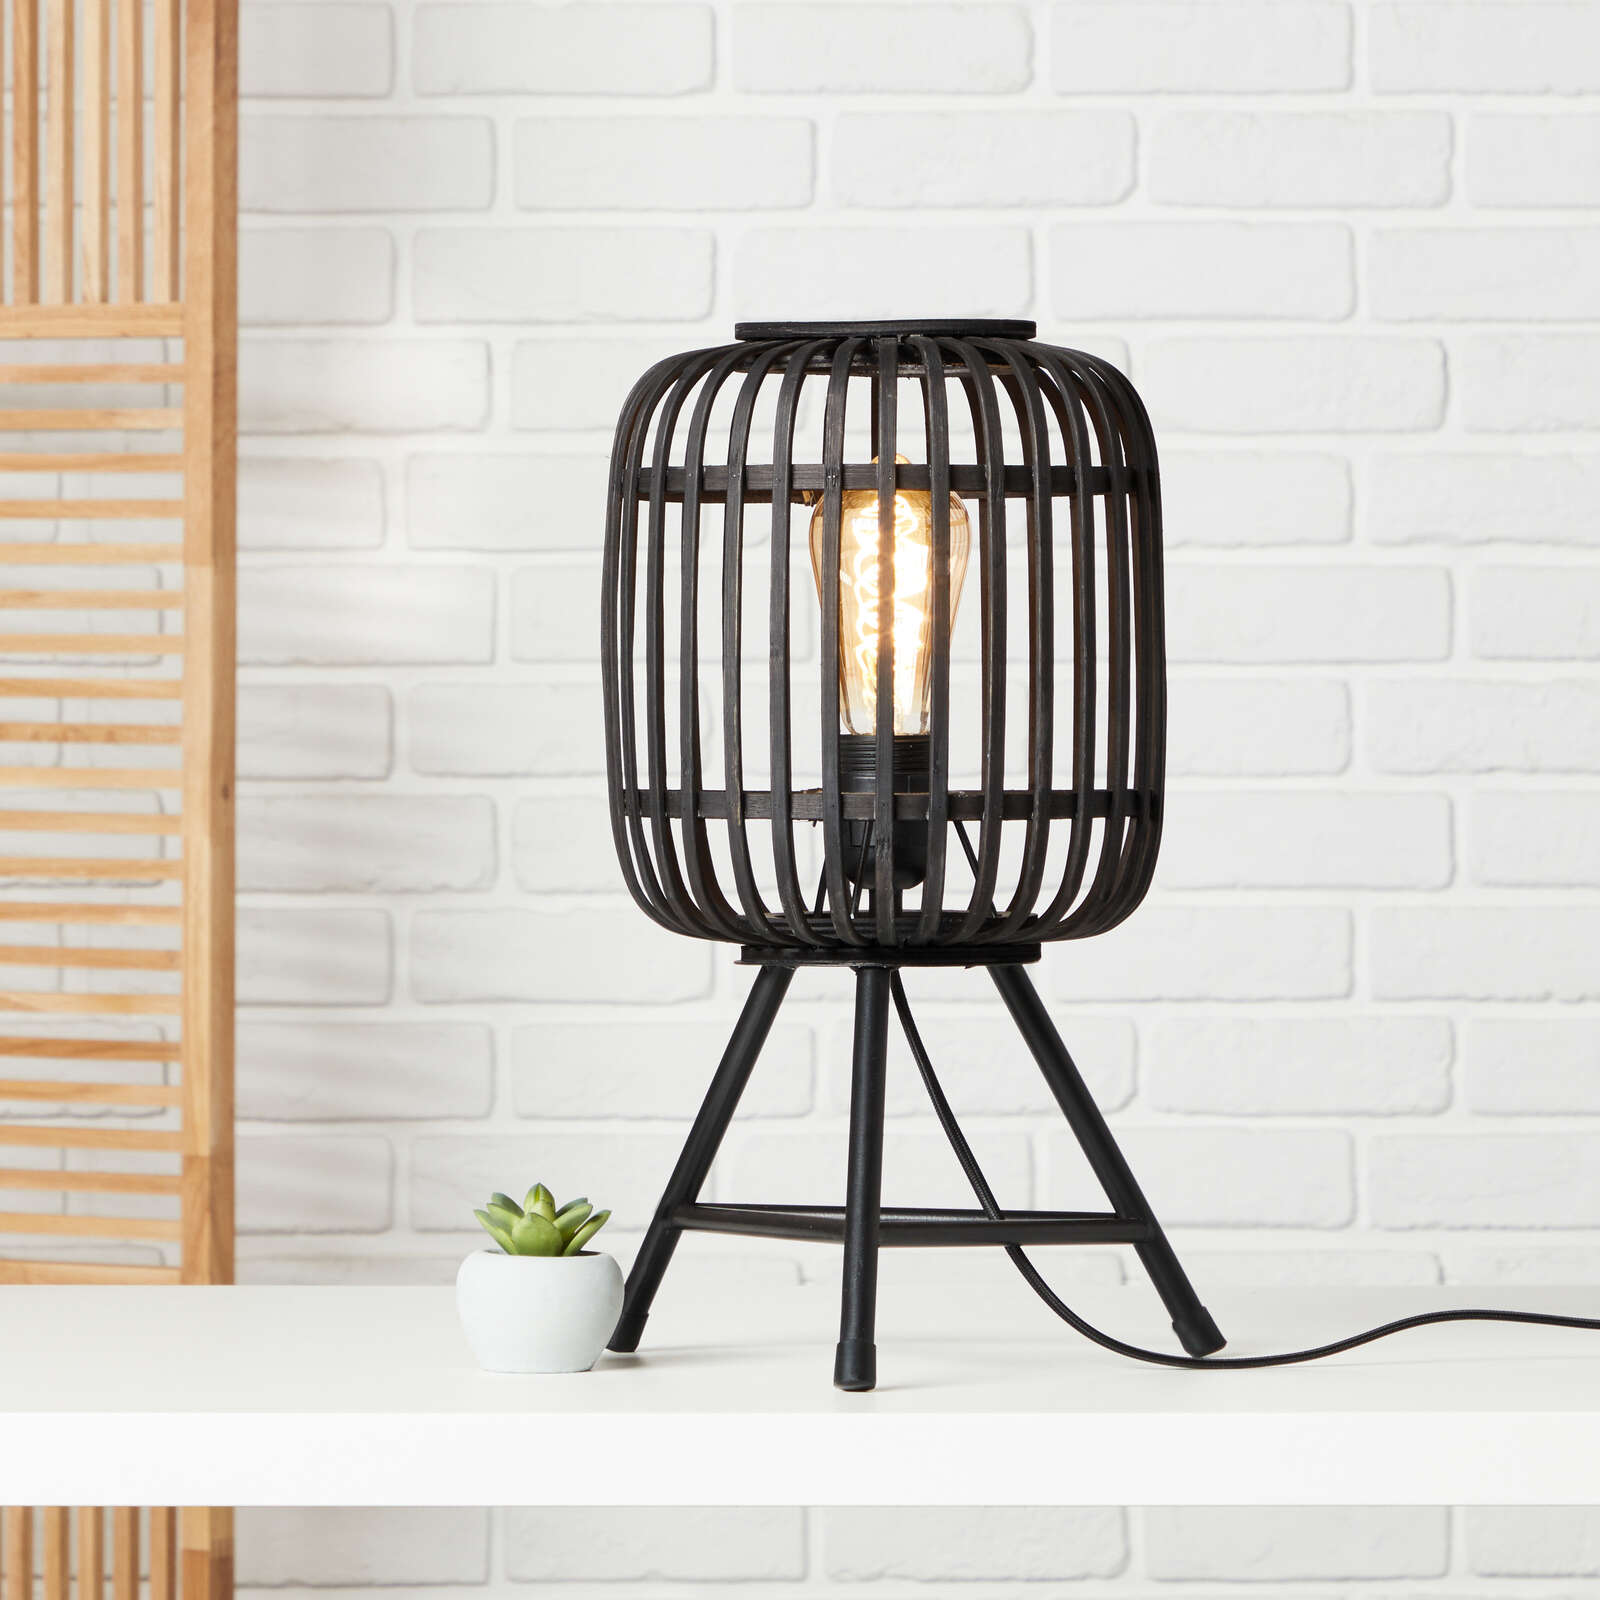             Bamboo table lamp - Willi 3 - Brown
        